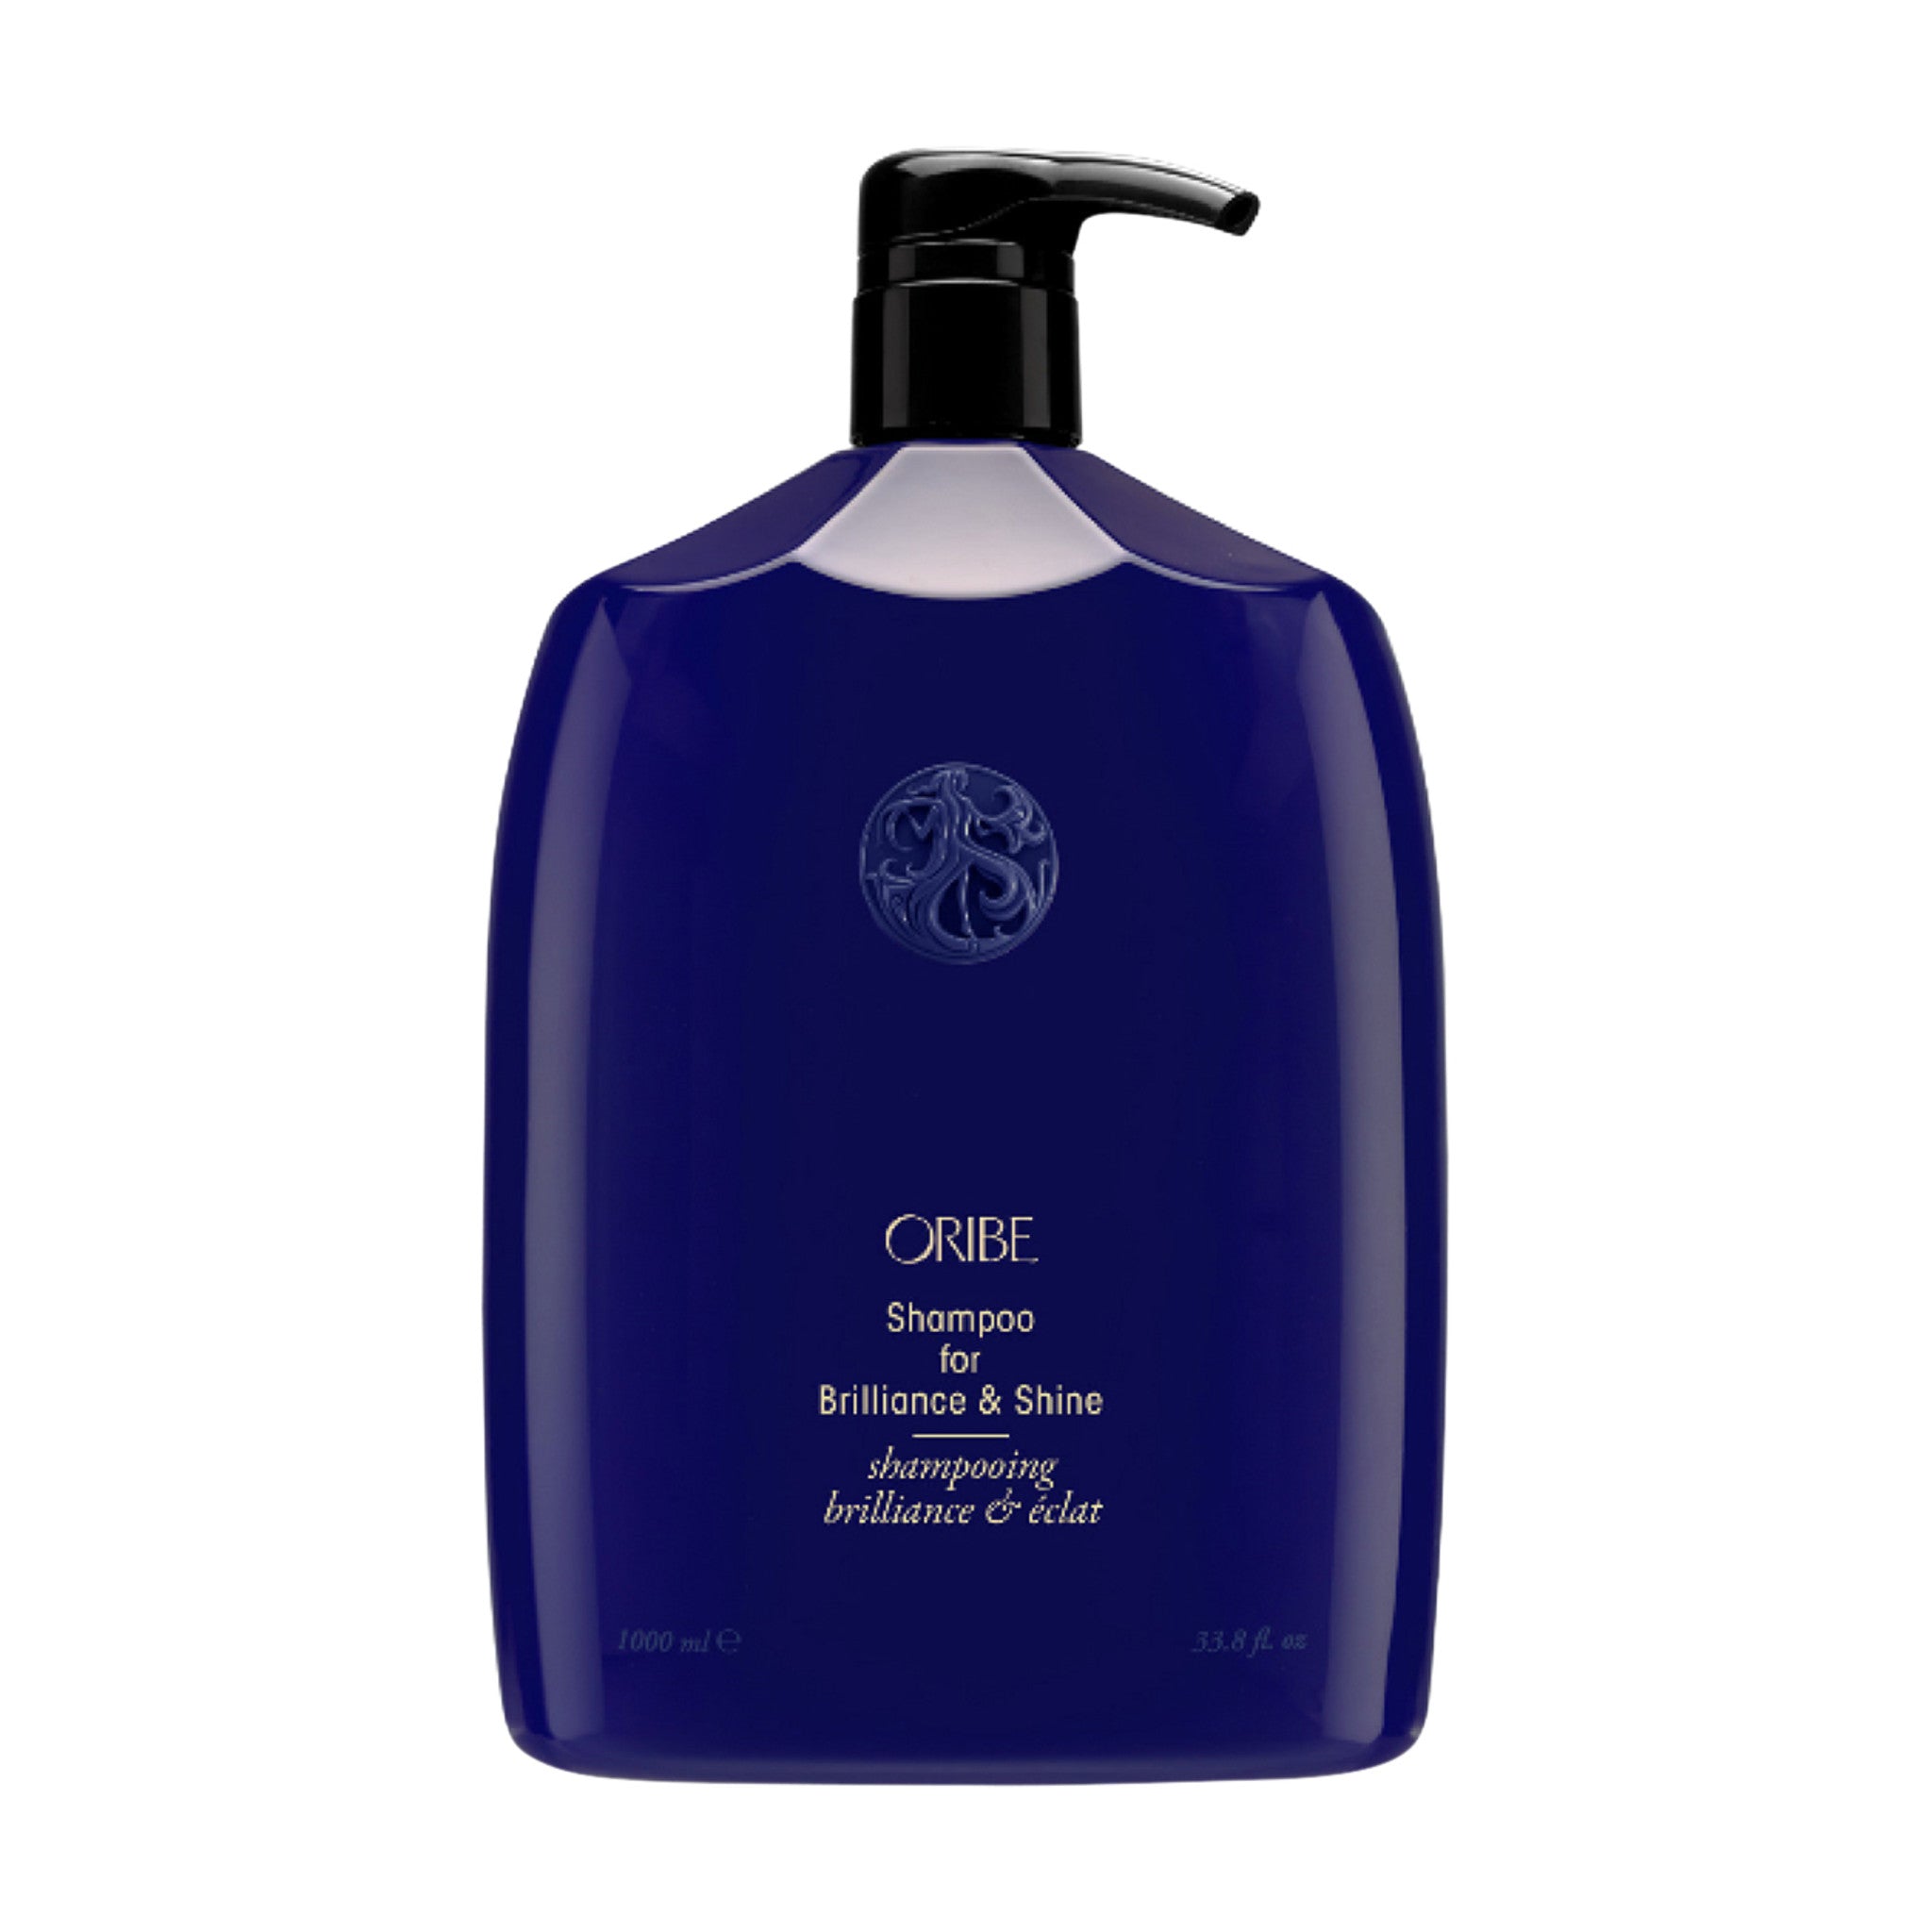 Oribe Shampoo For Brilliance and Shine Size variant: 33.8 oz main image.